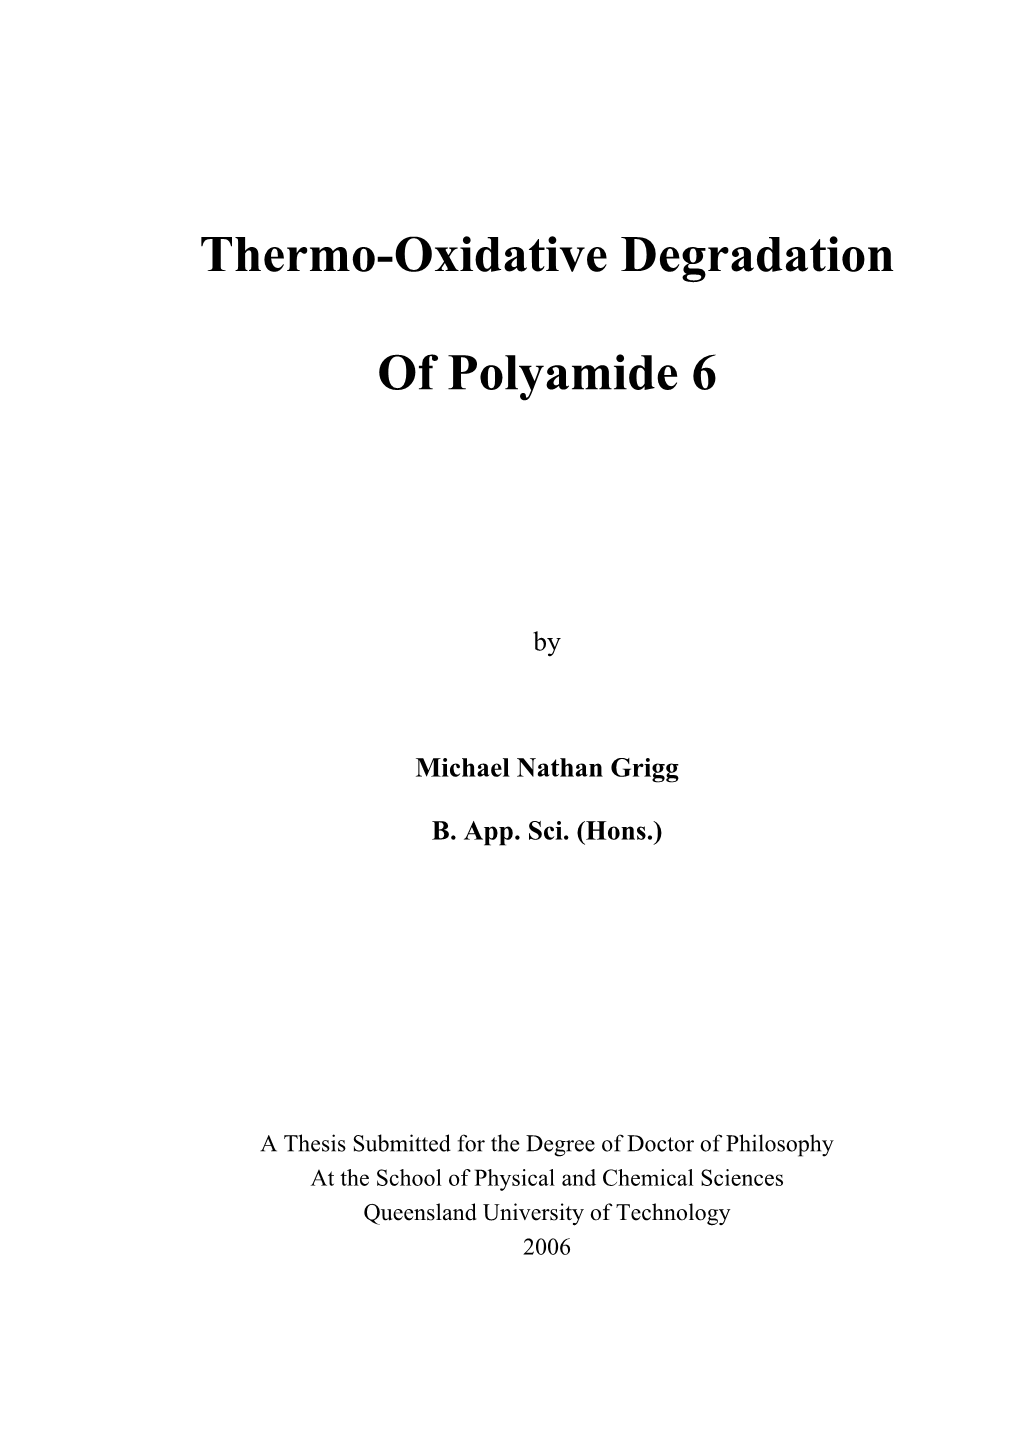 Thermo-Oxidative Degradation of Polyamide 6